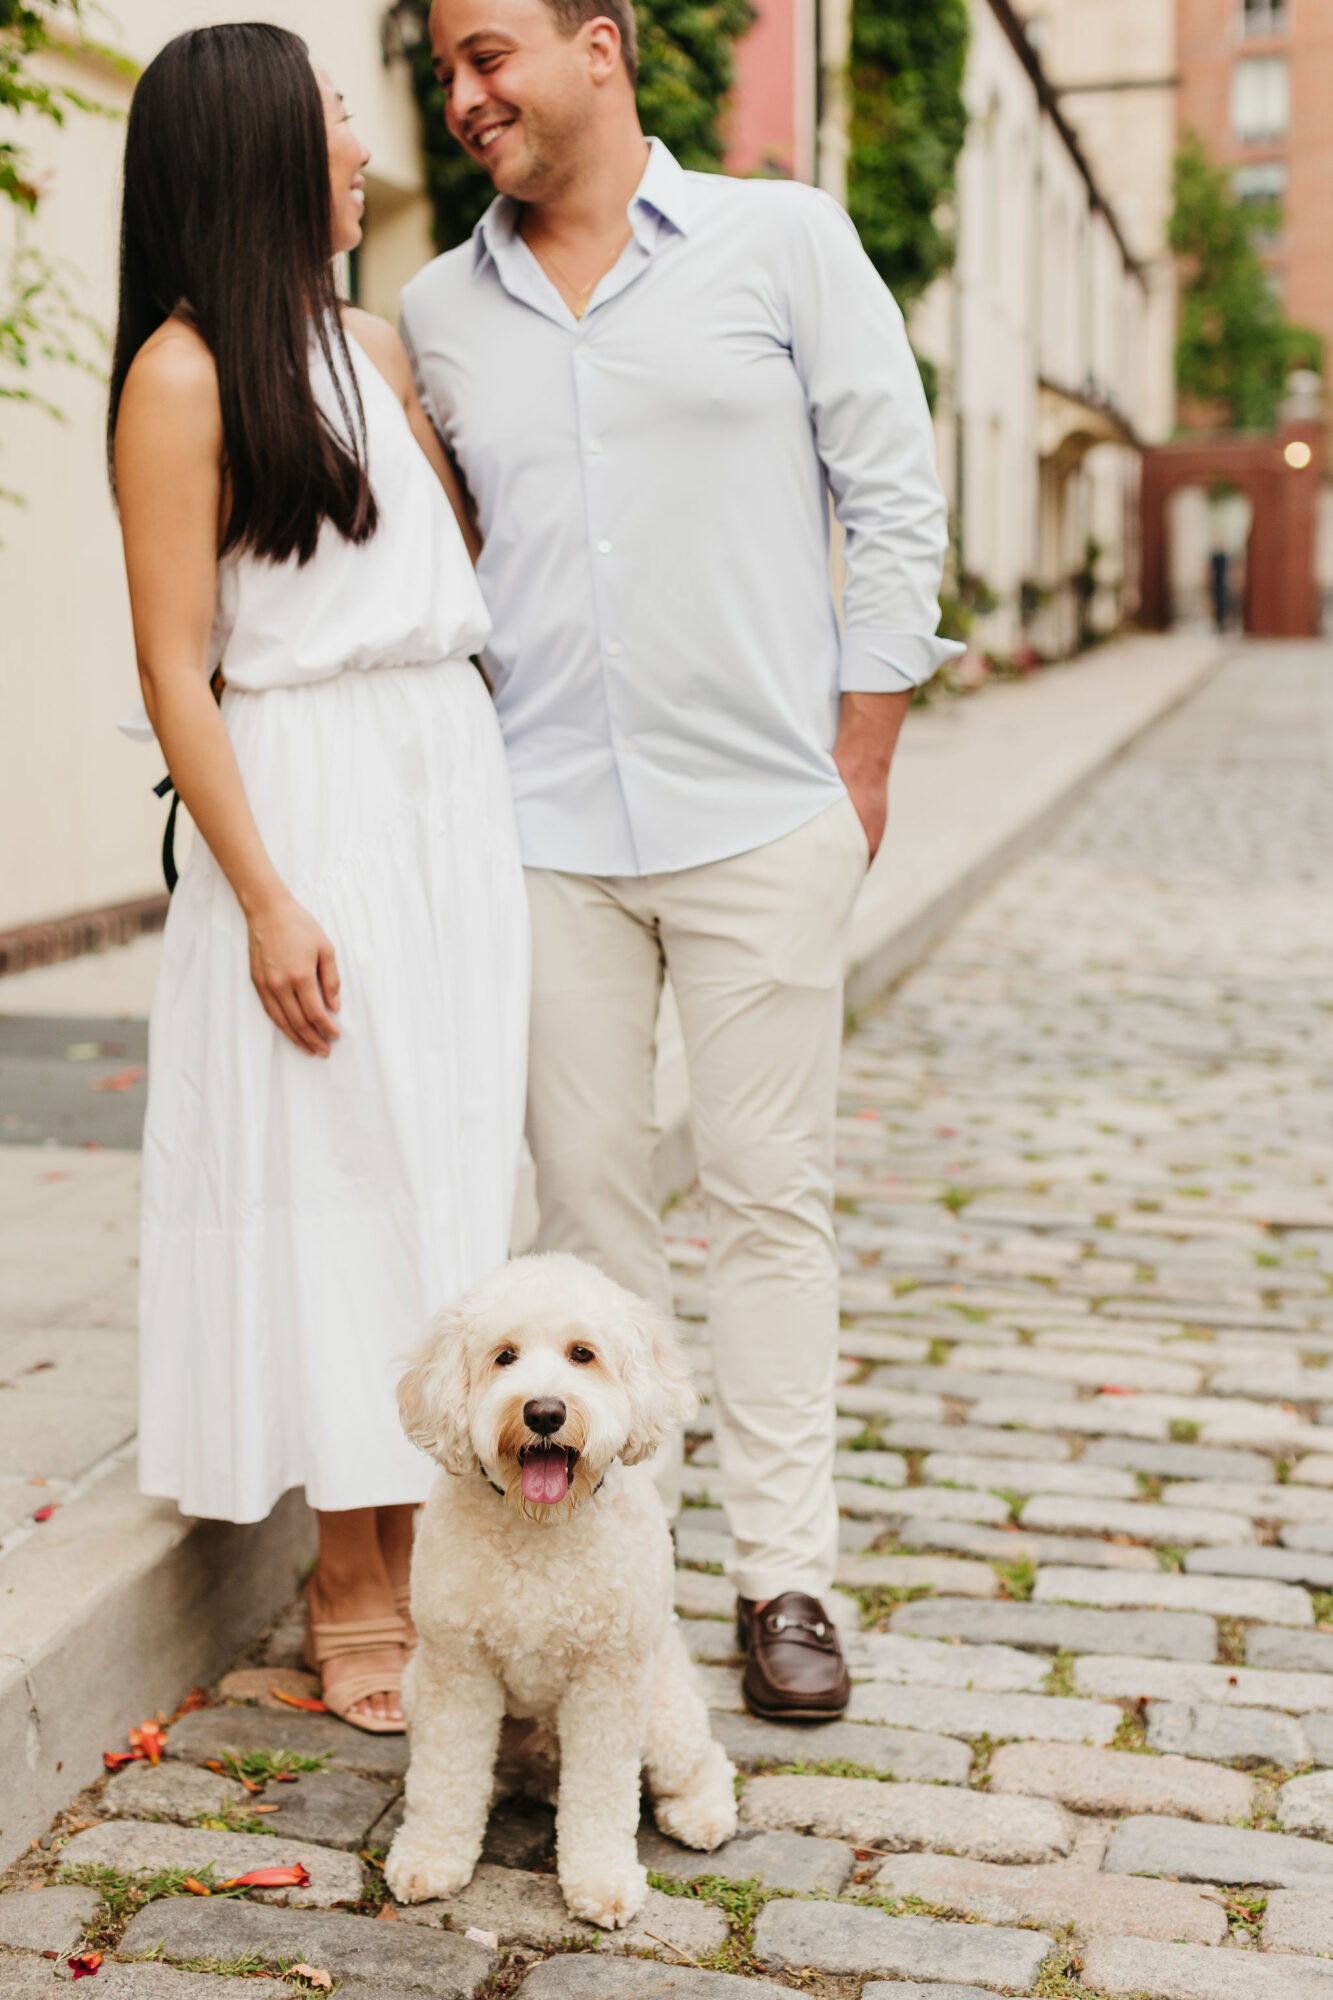 greenwich village, engagement photos, new york city streets, white dress, dog